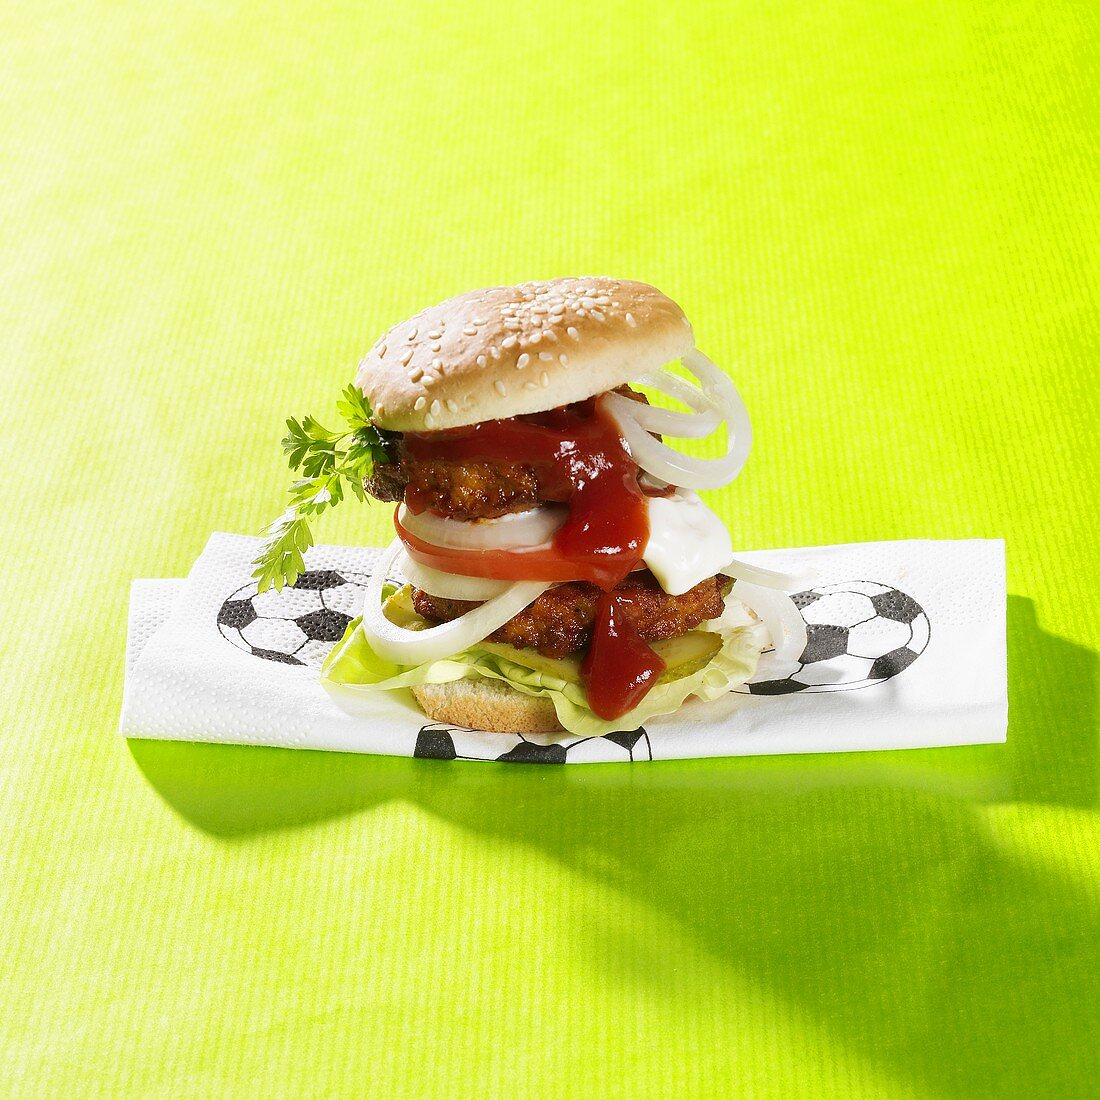 Burger on napkin with football motif